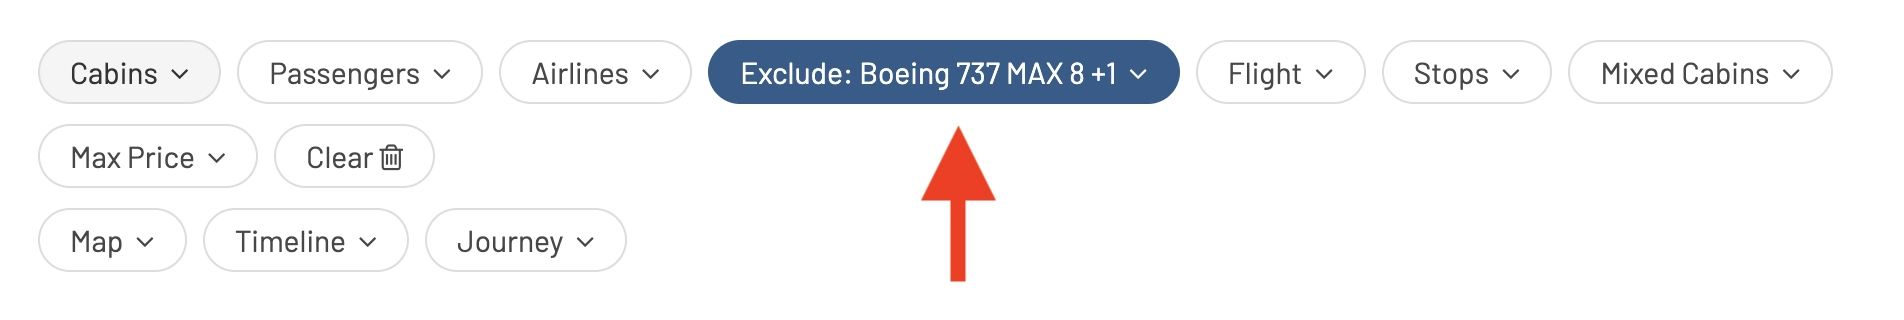 Avoid the 737 MAX when booking an award flight.